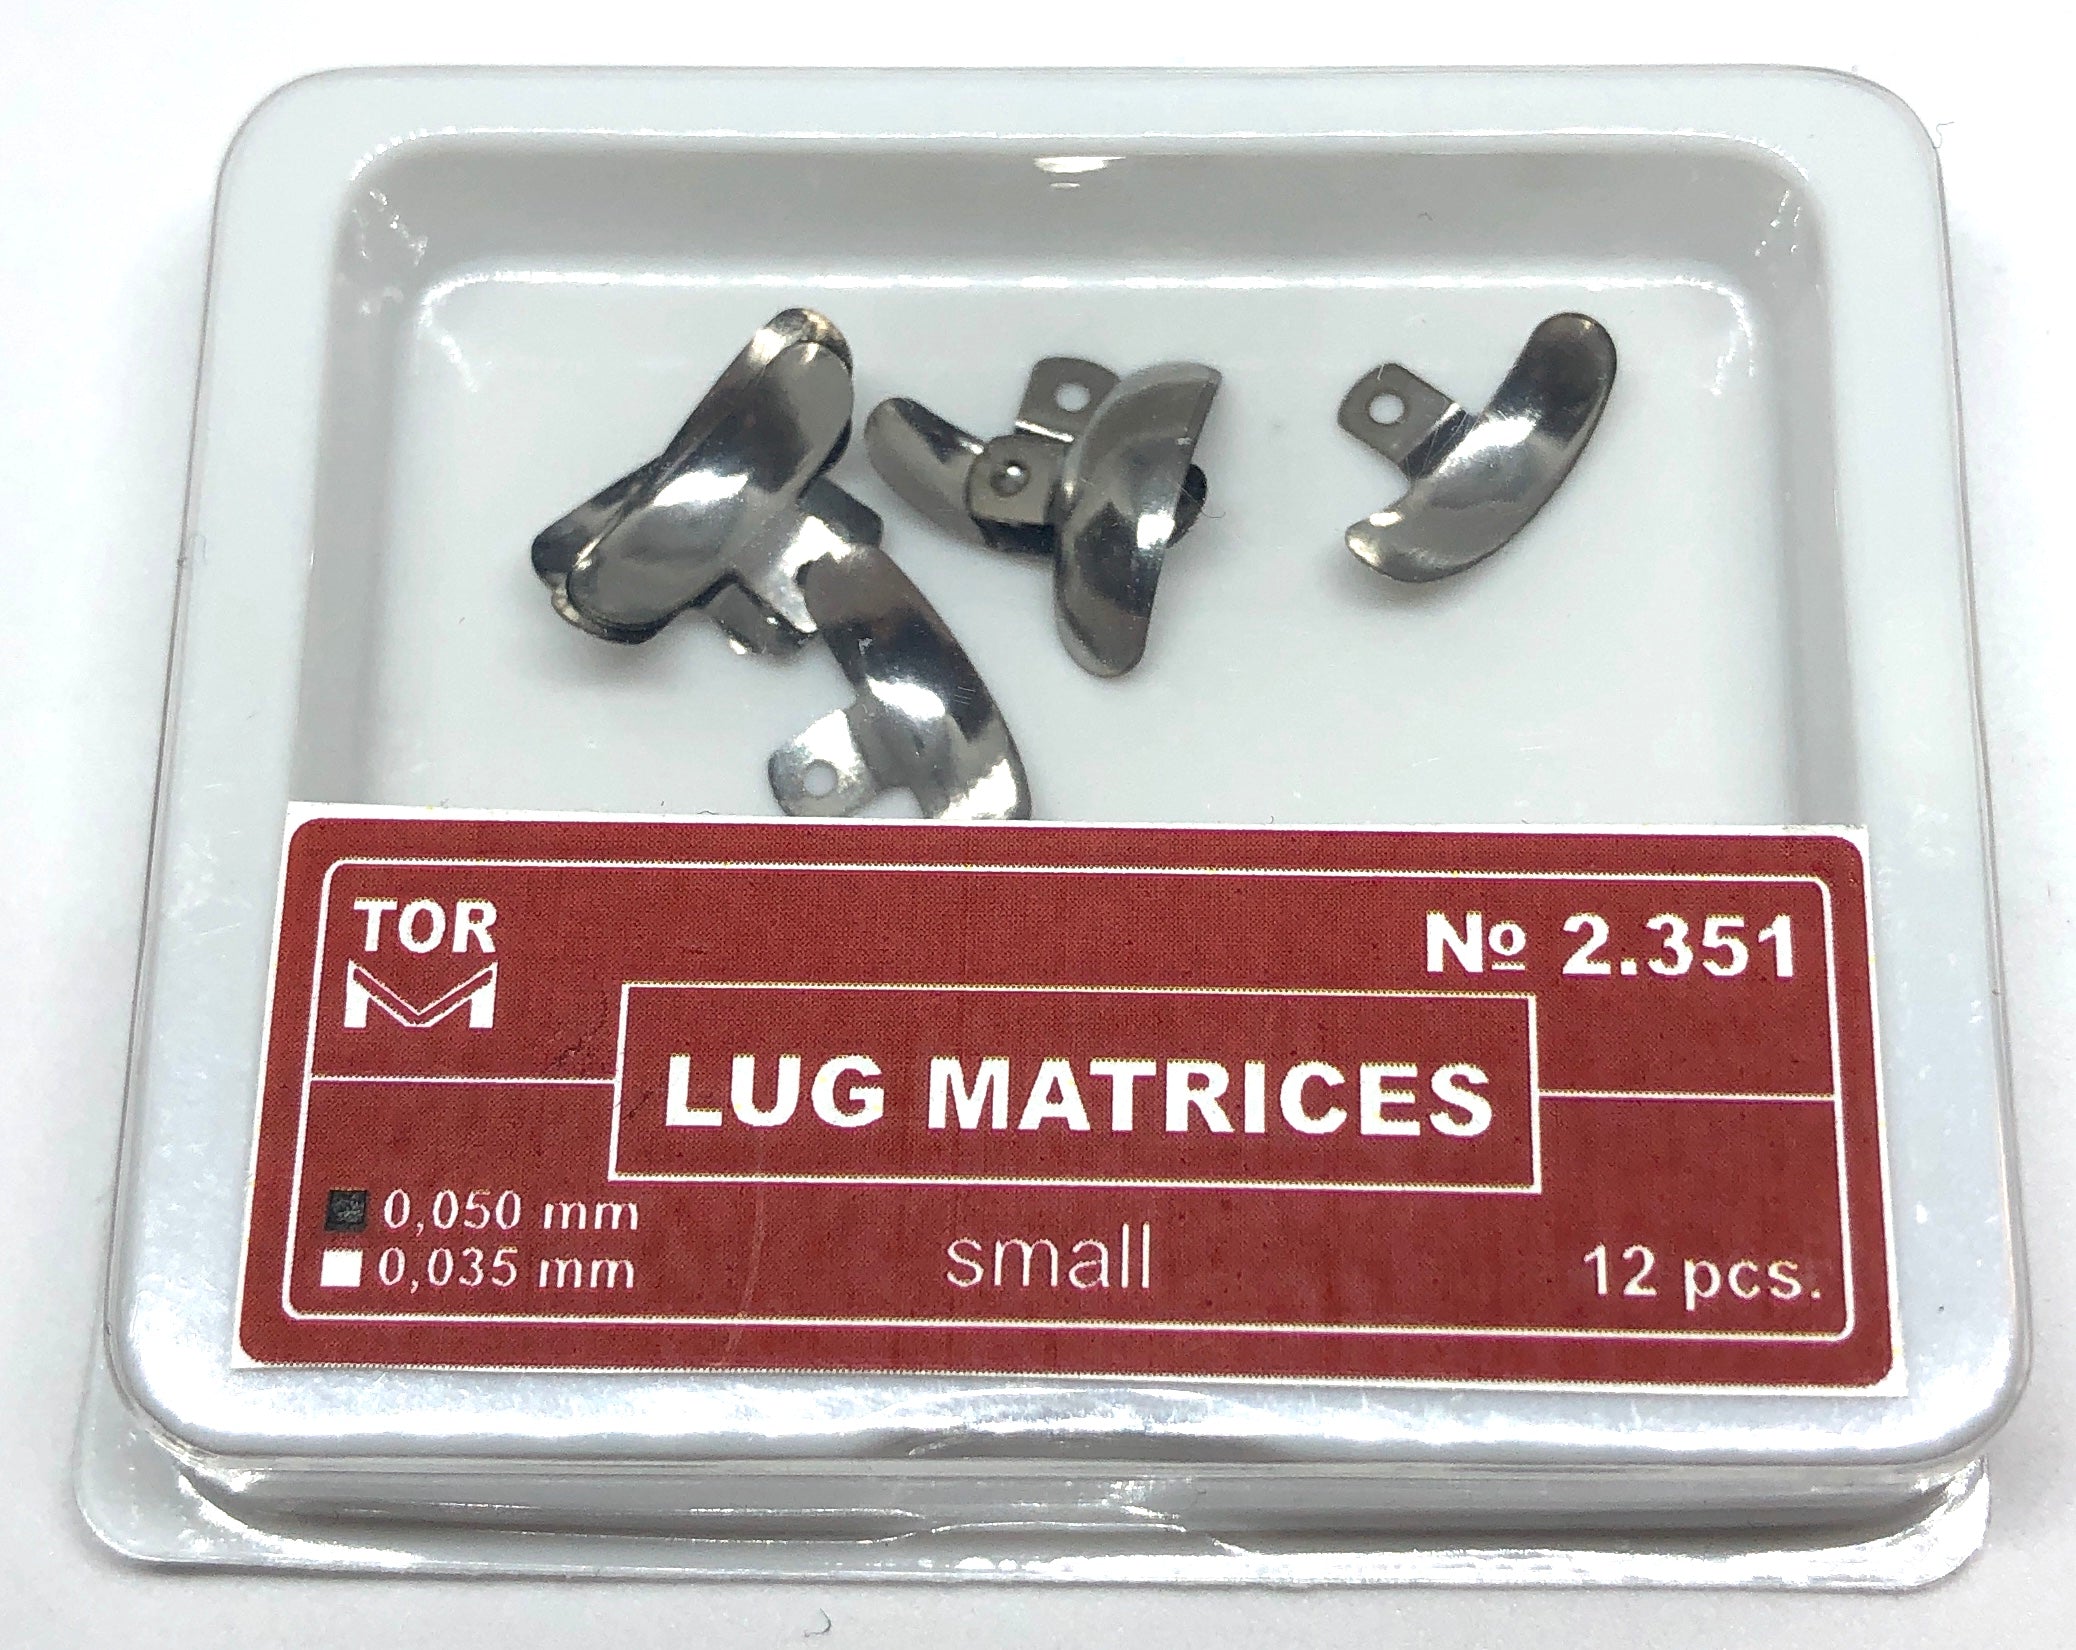 lug-matrices-small-12-pcs-1